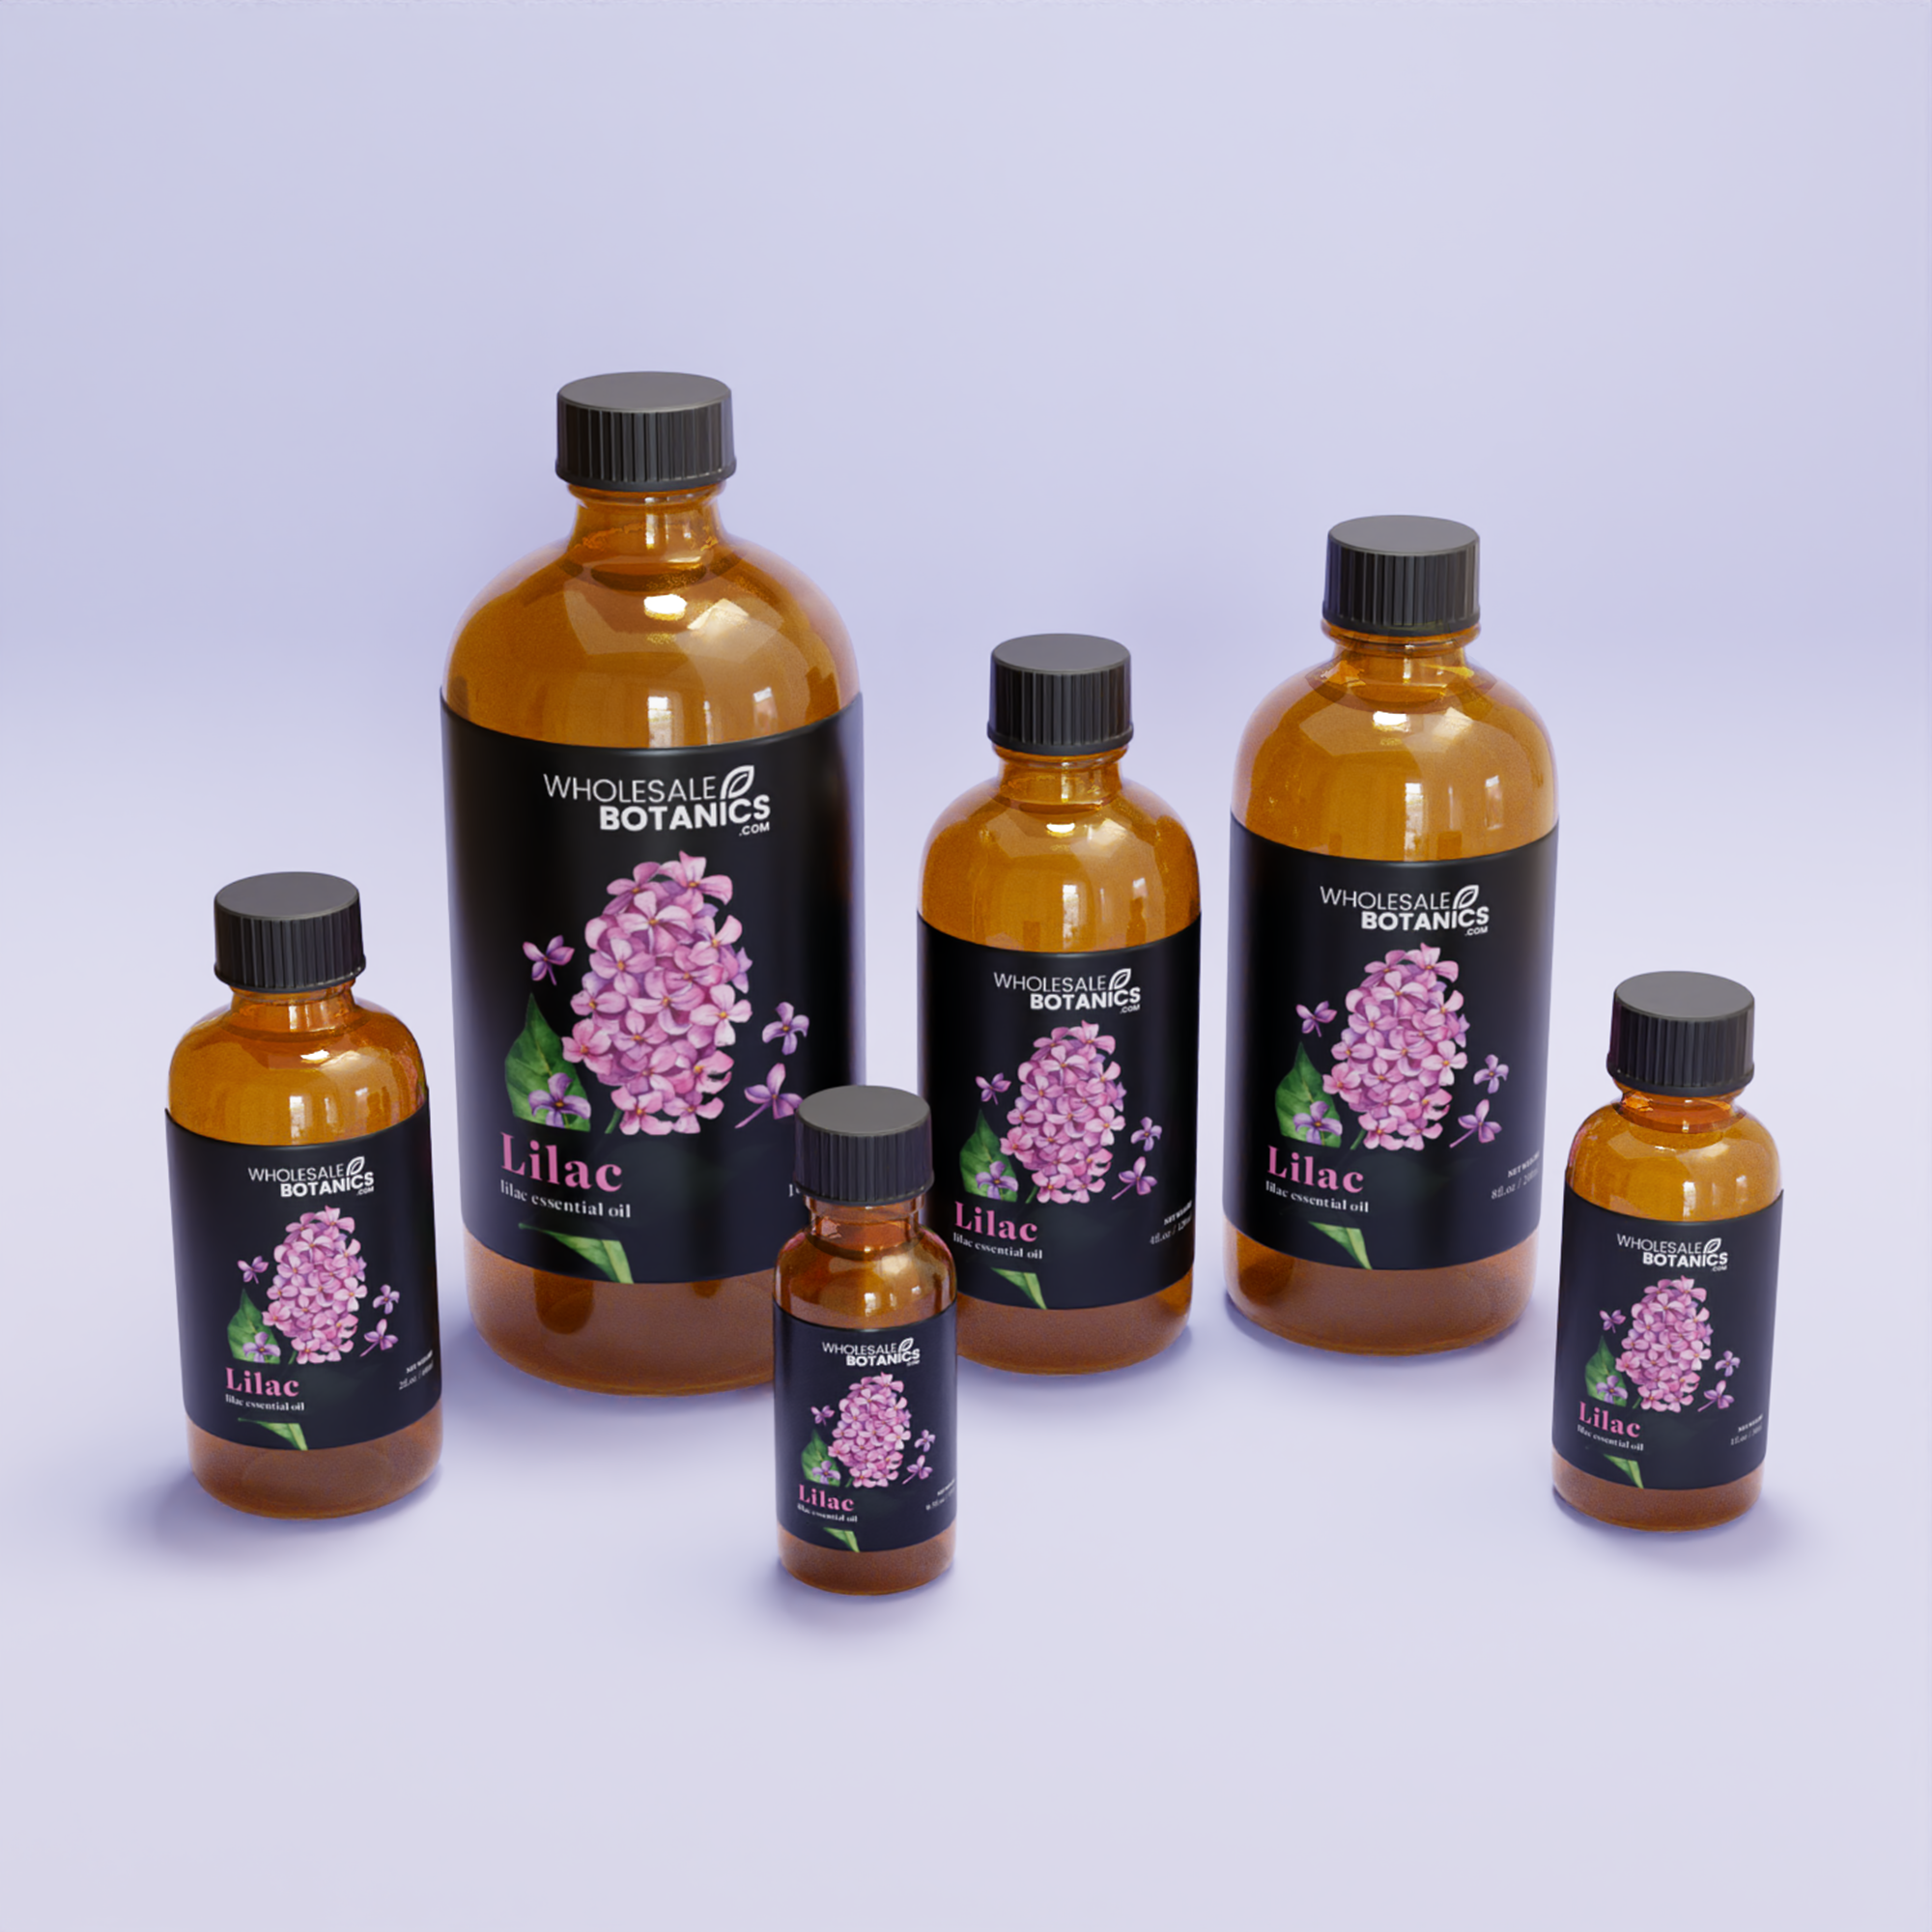 Woodbridge Cashmere & Lilac Essential Oil